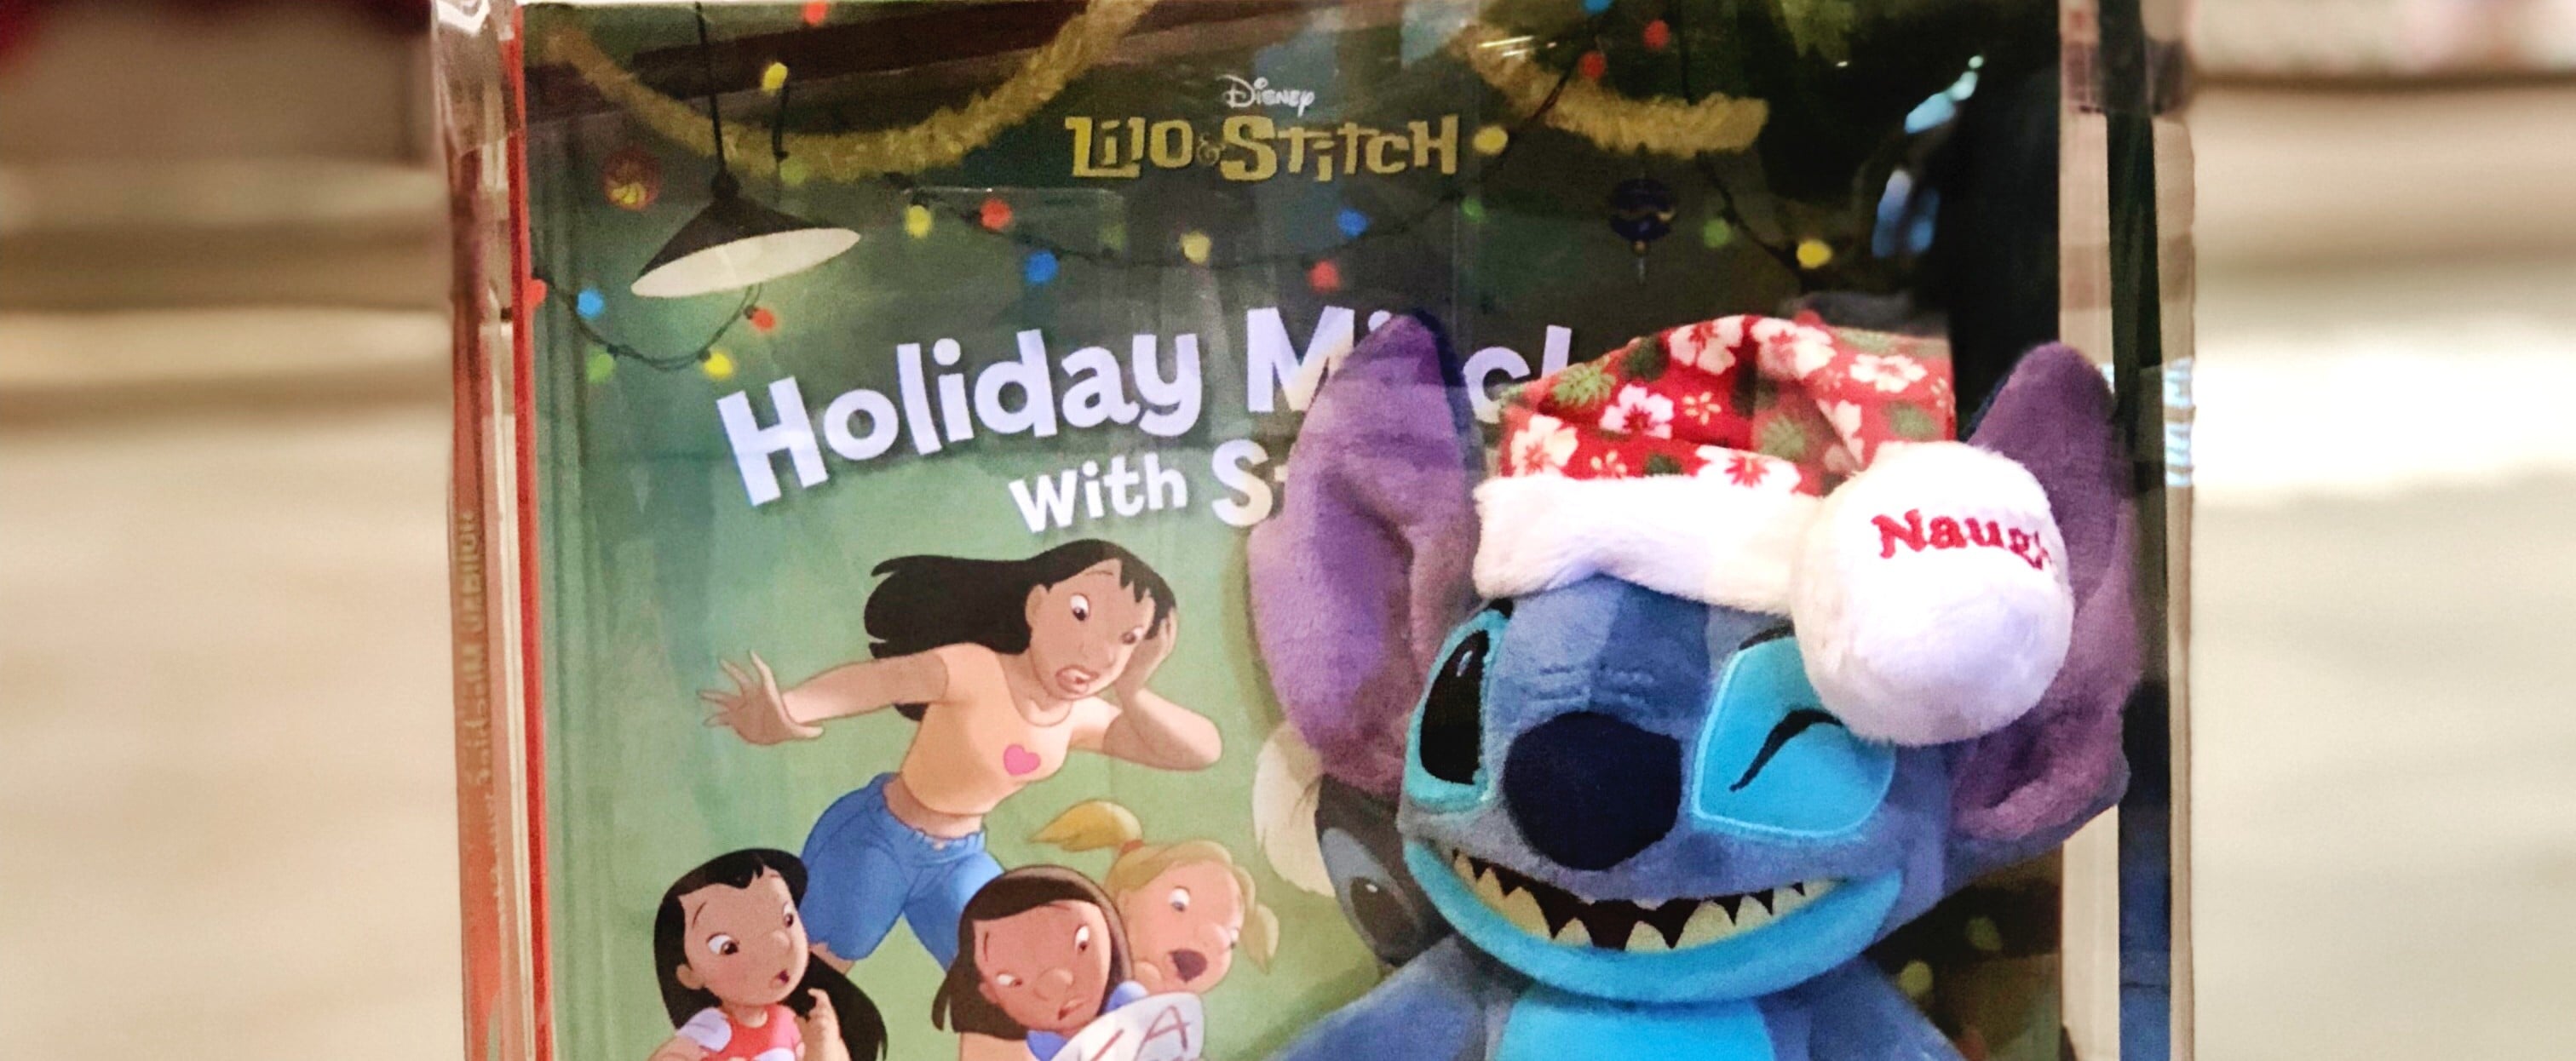 Lilo & Stitch Elf on the Shelf